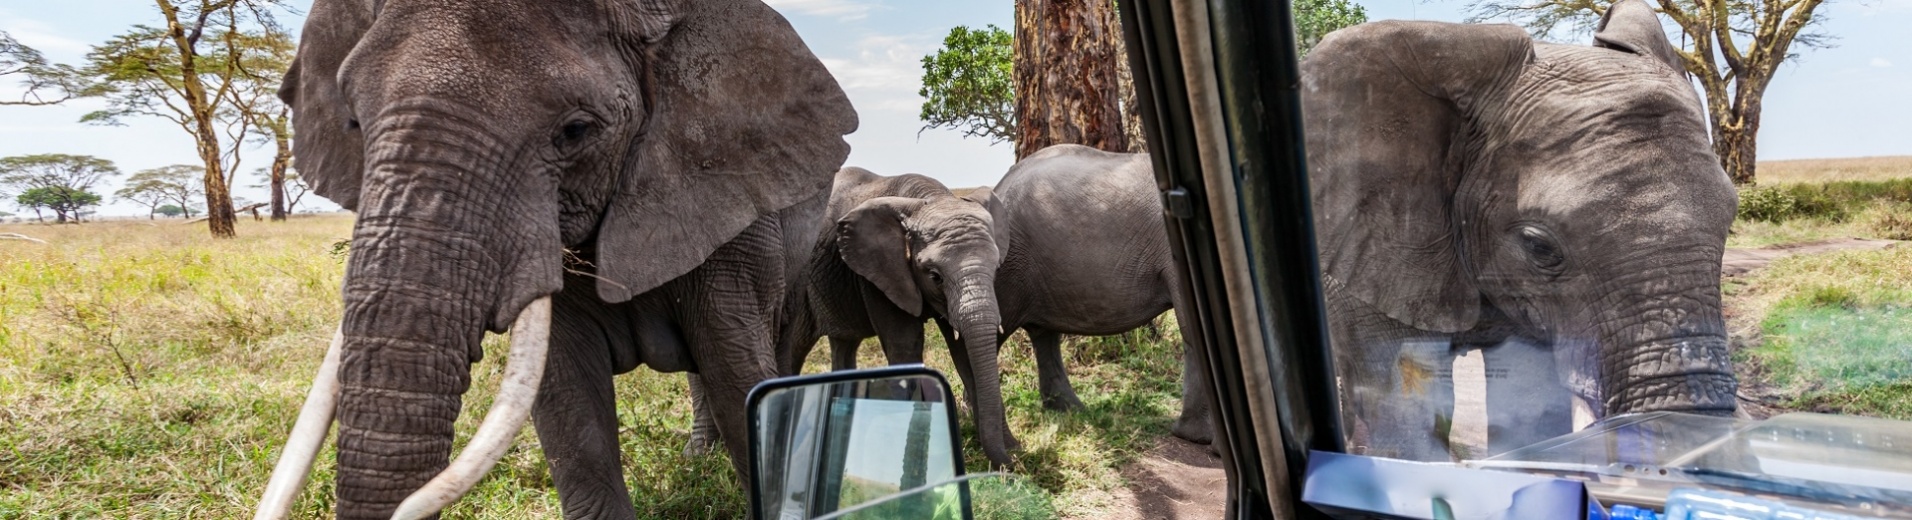 elephants approchant une voiture safari tanzanie